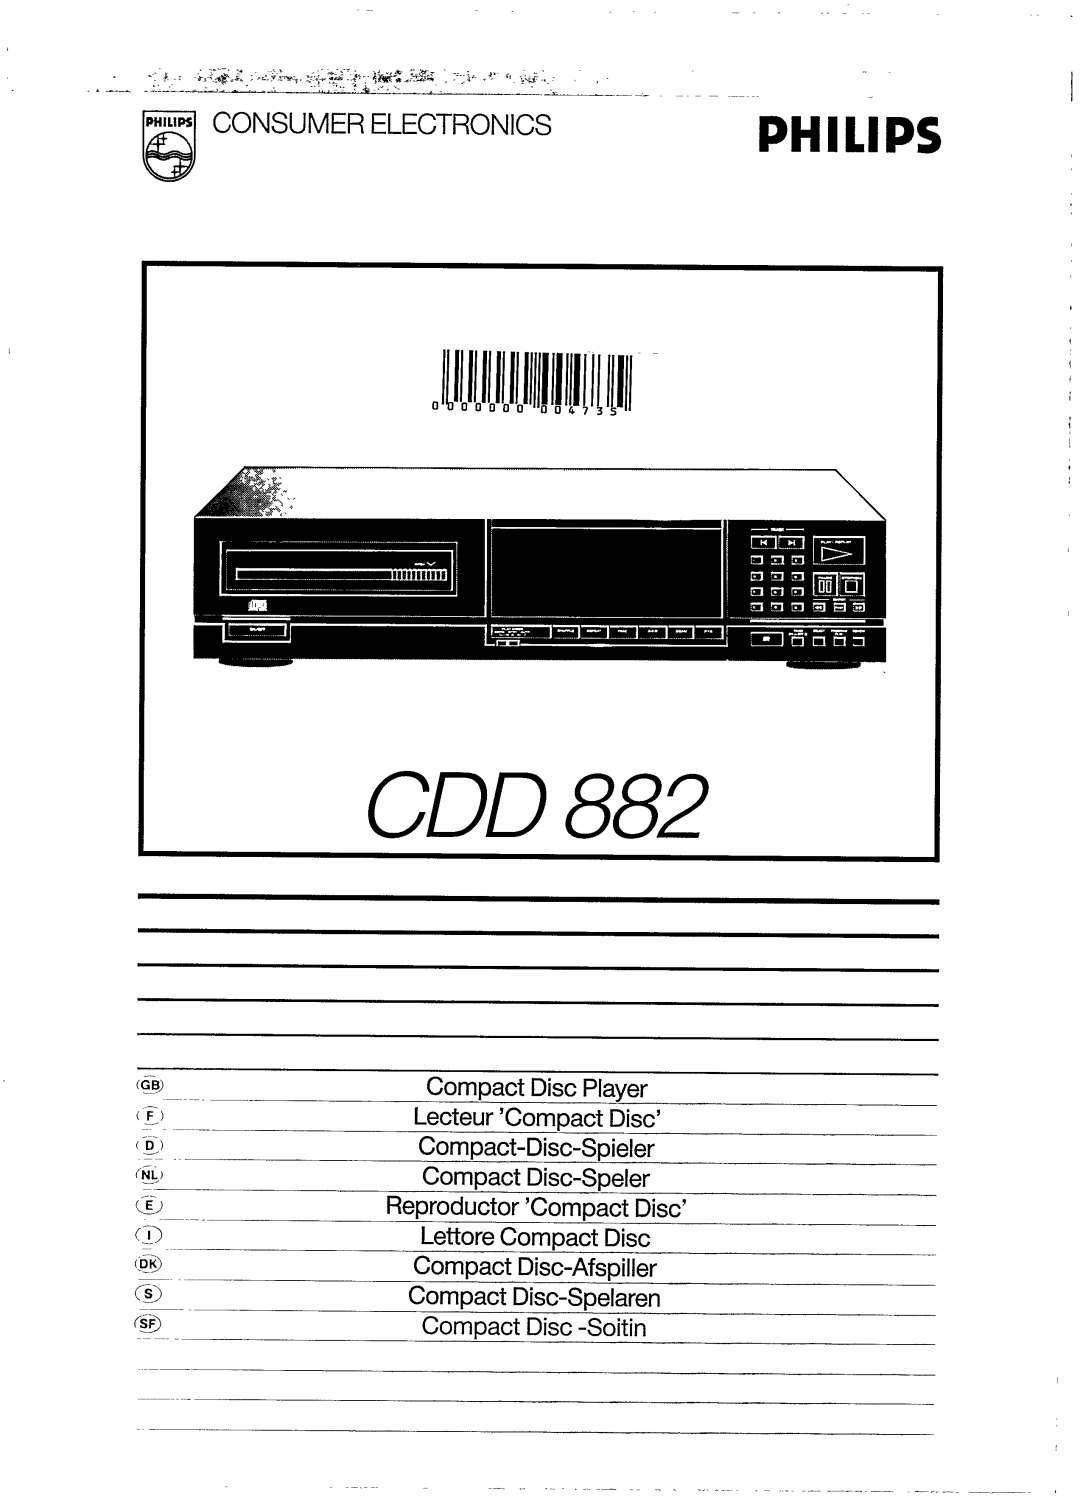 Philips CDD 882 manual 